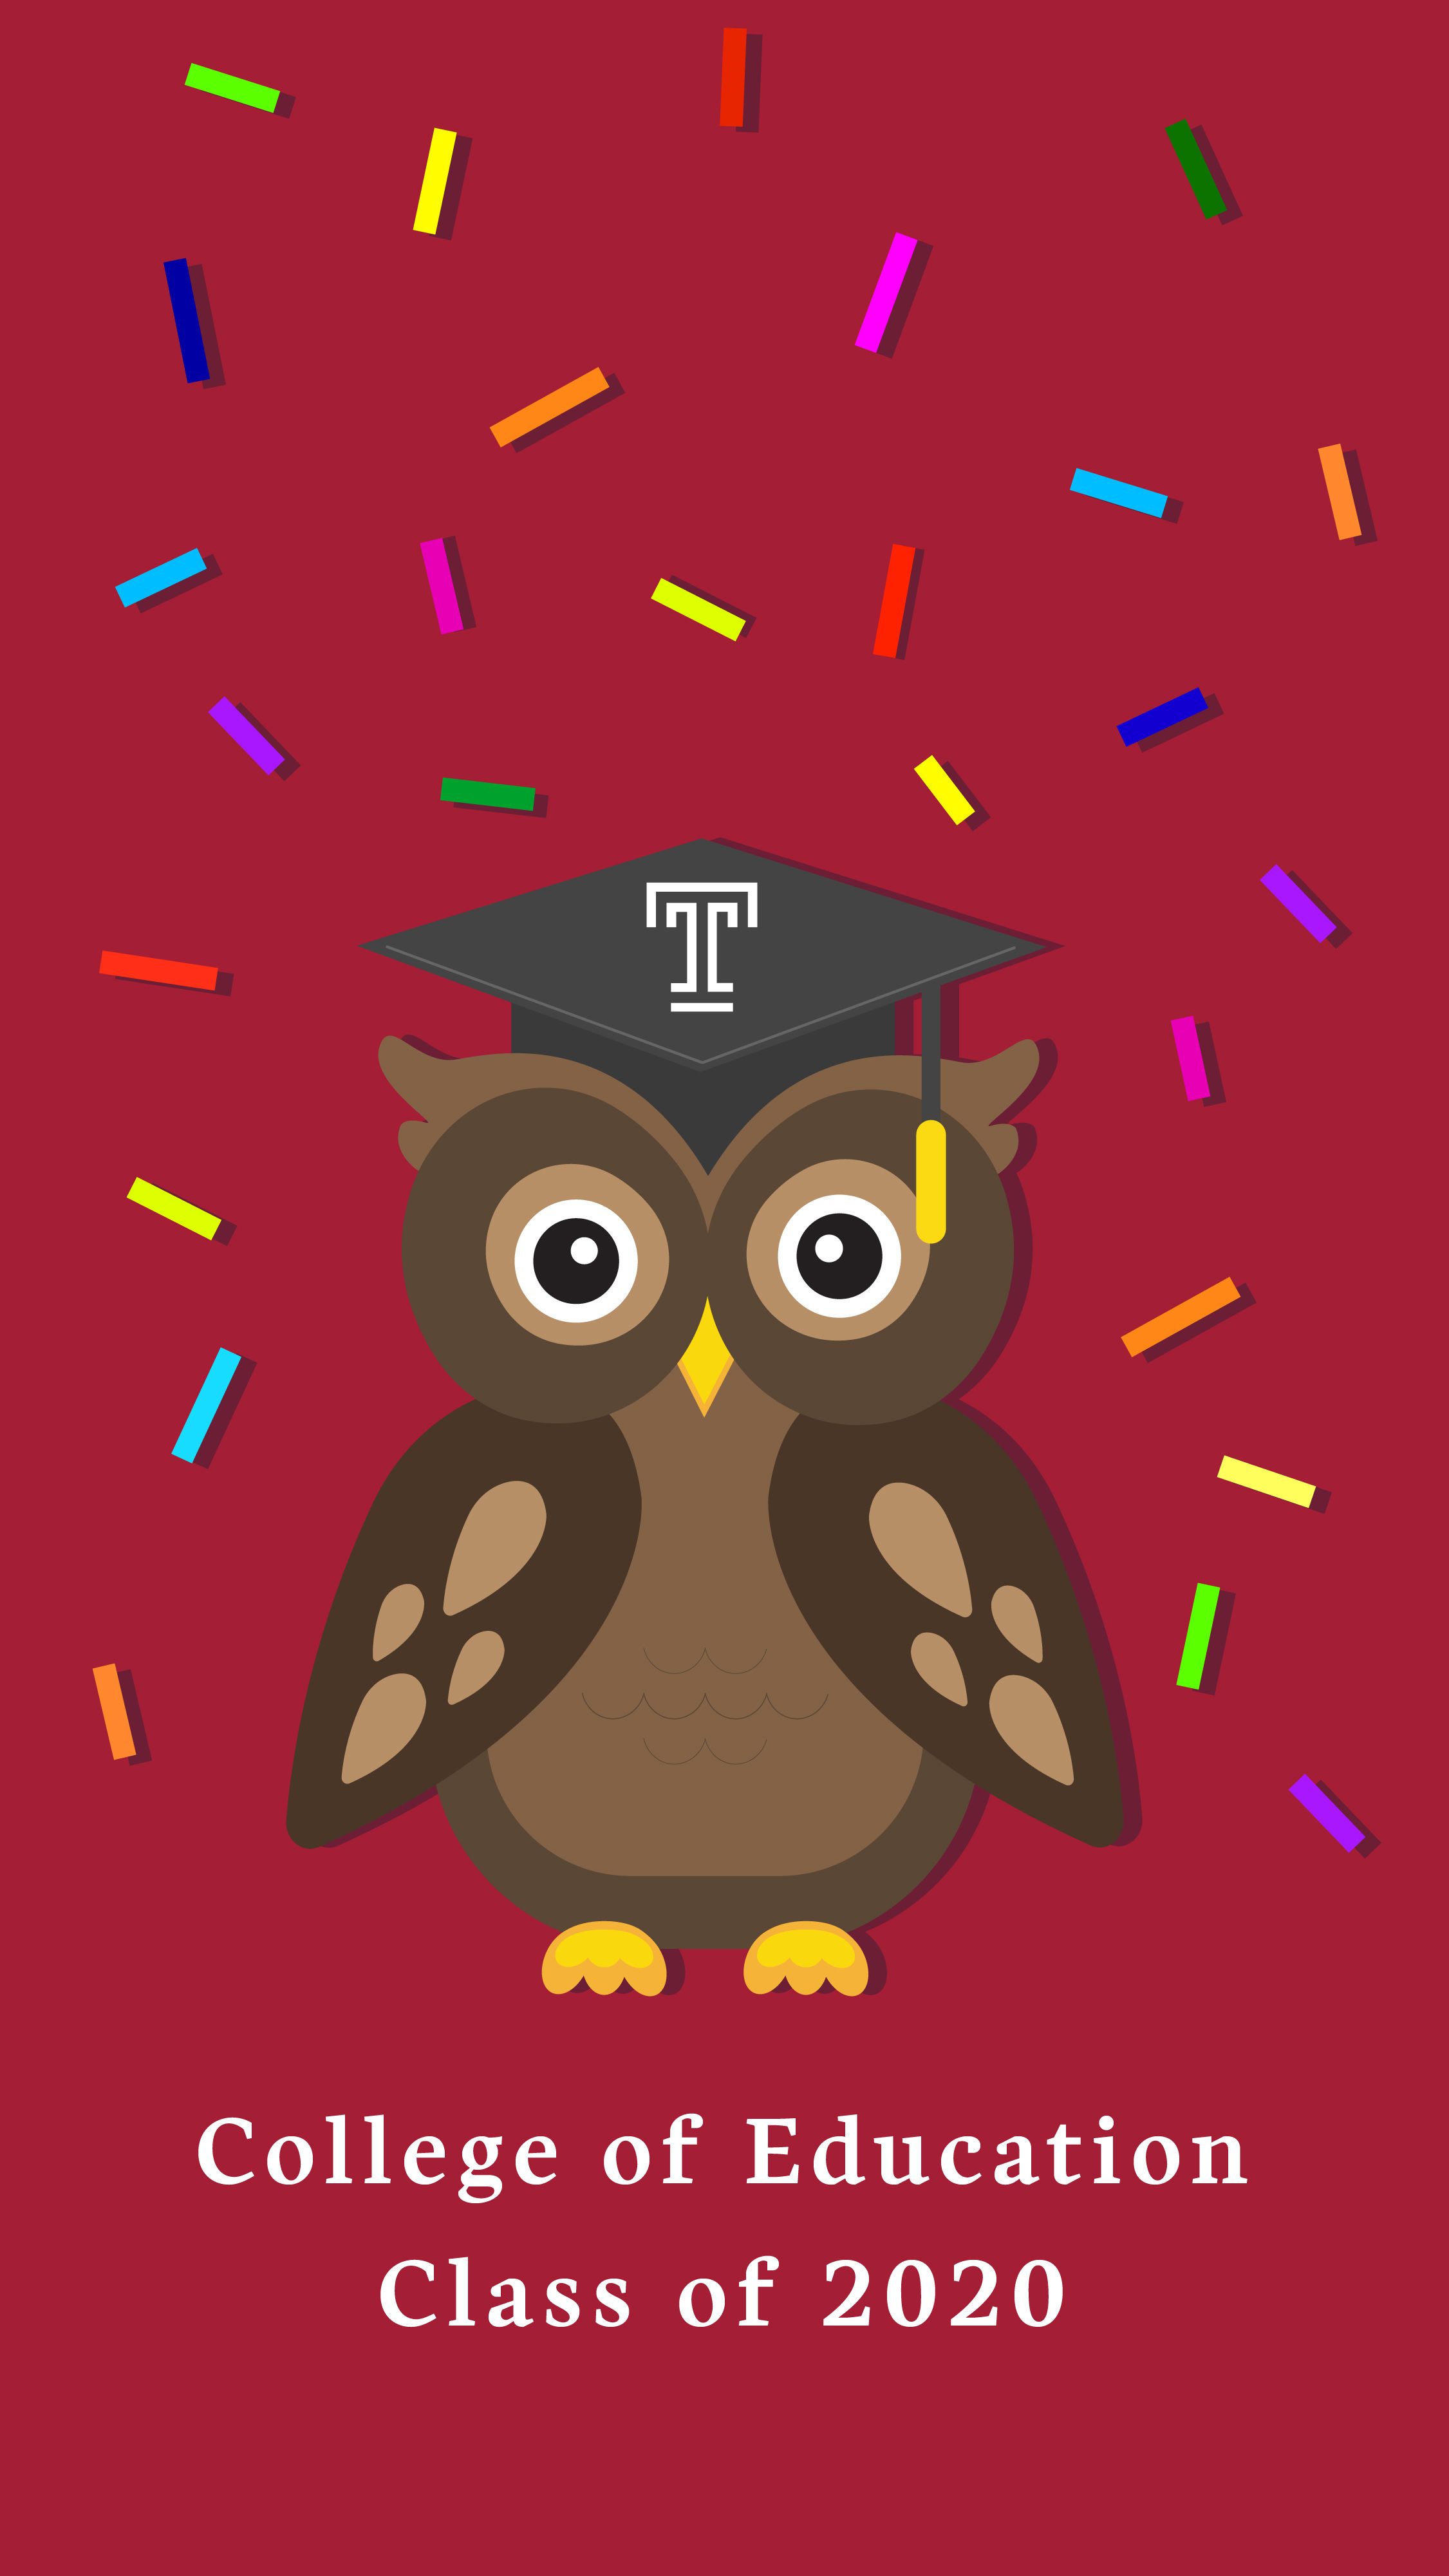 Homescreen image with animated owl